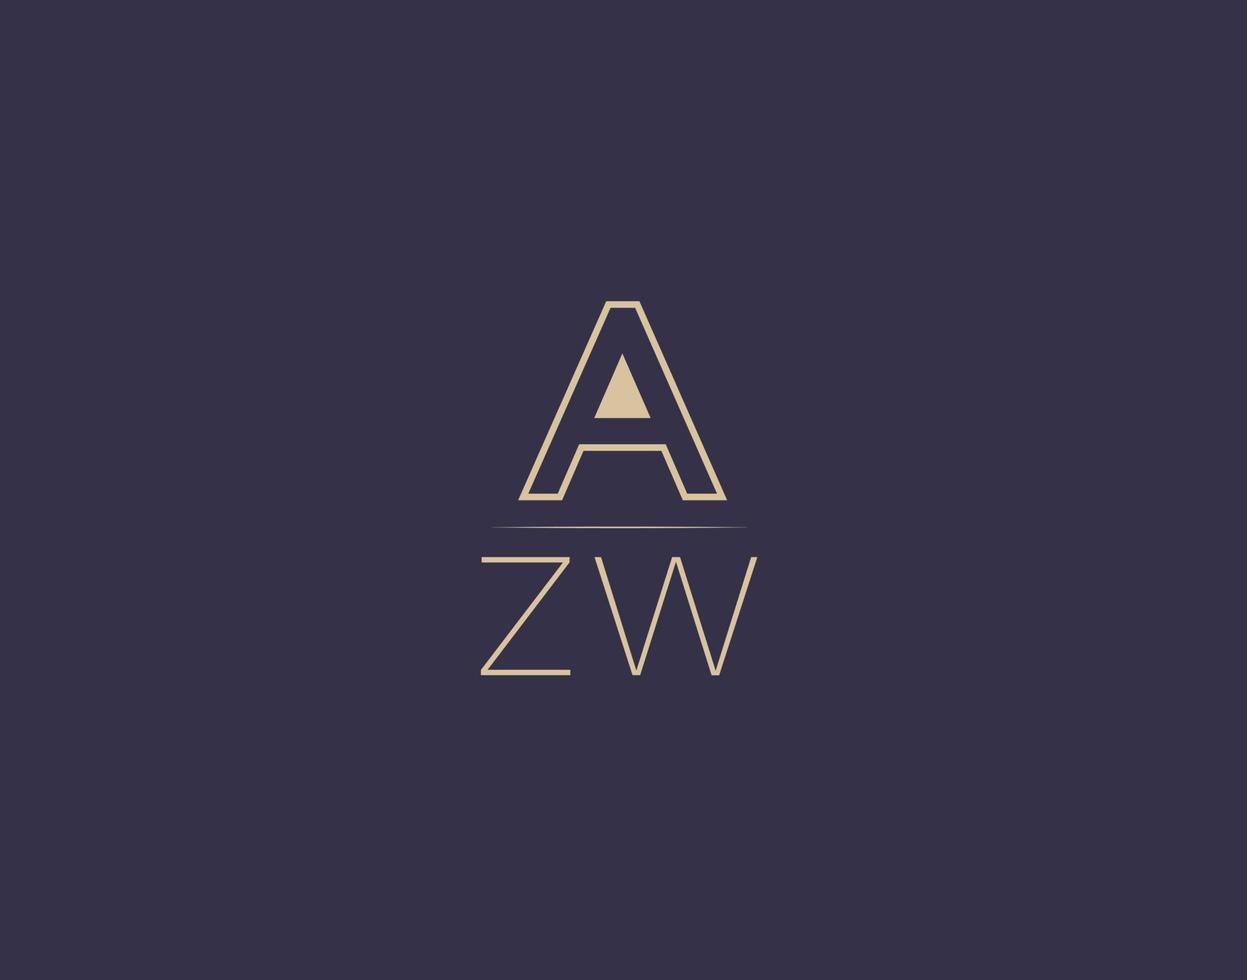 azw brief logo ontwerp modern minimalistische vector afbeeldingen